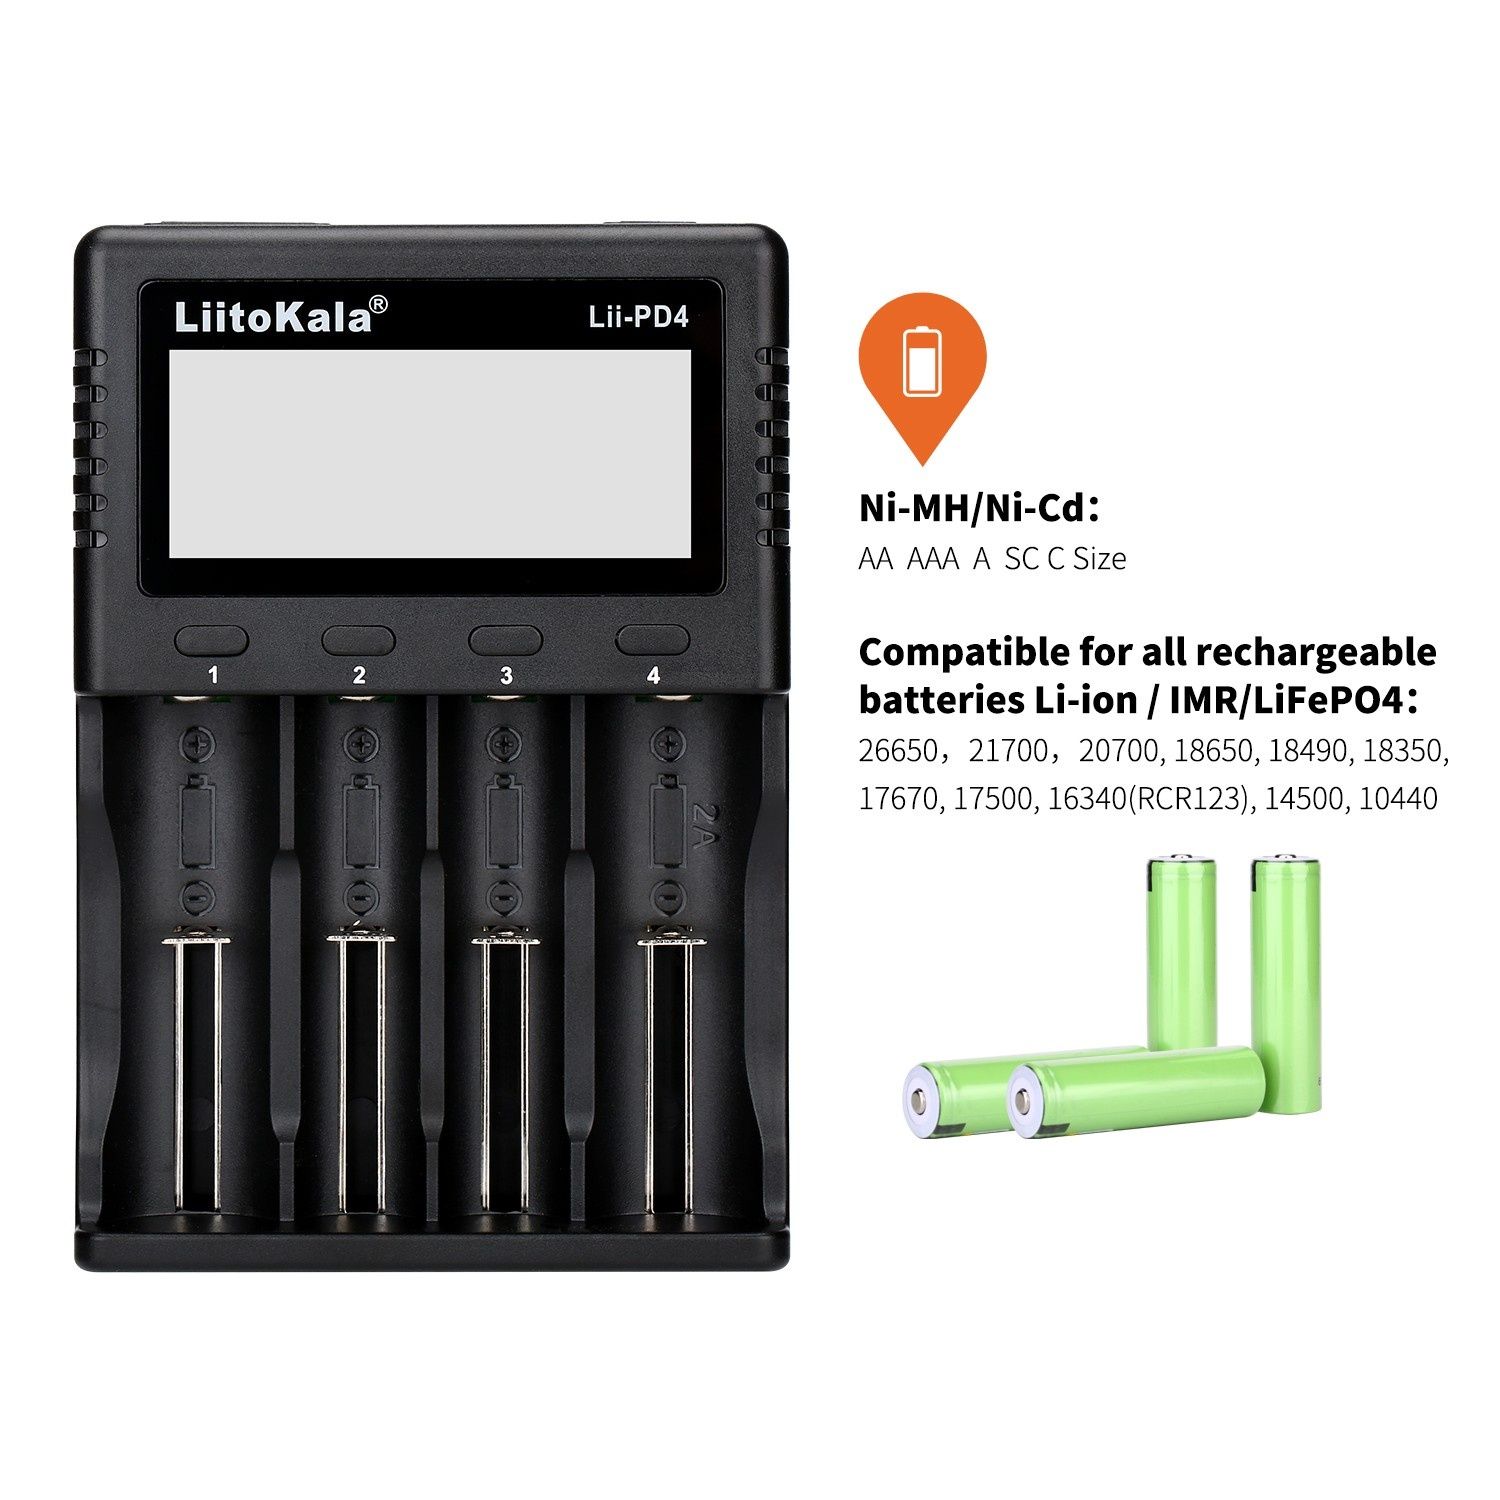 LiitoKala Lii-PD4 универсальное зарядное устройство